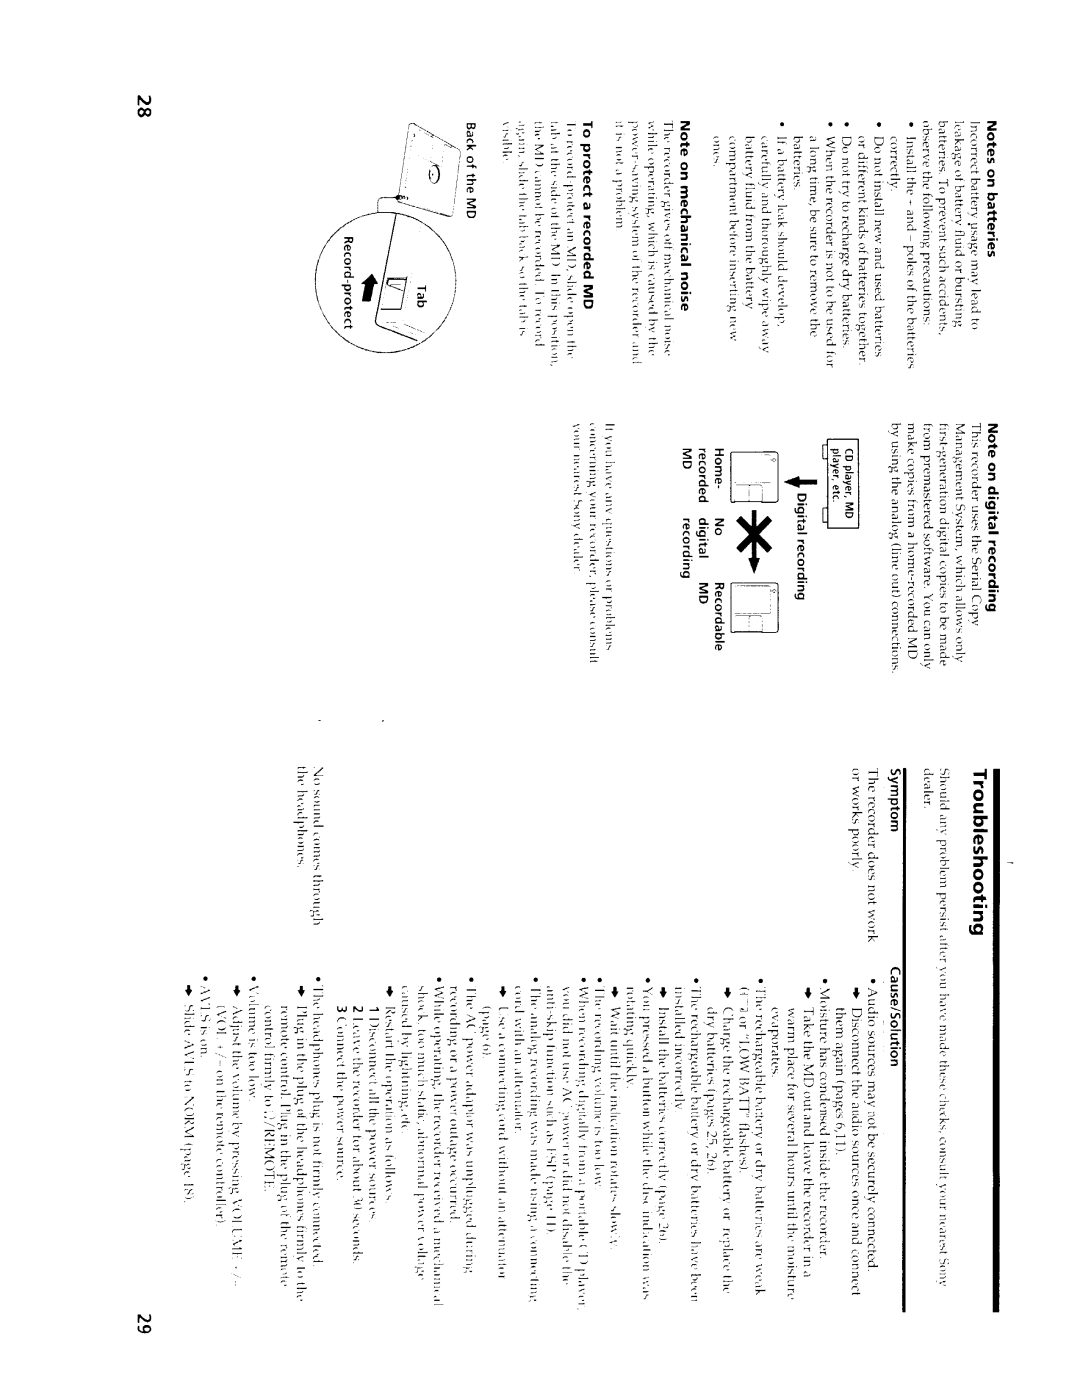 Sony MZ-R50 manual 